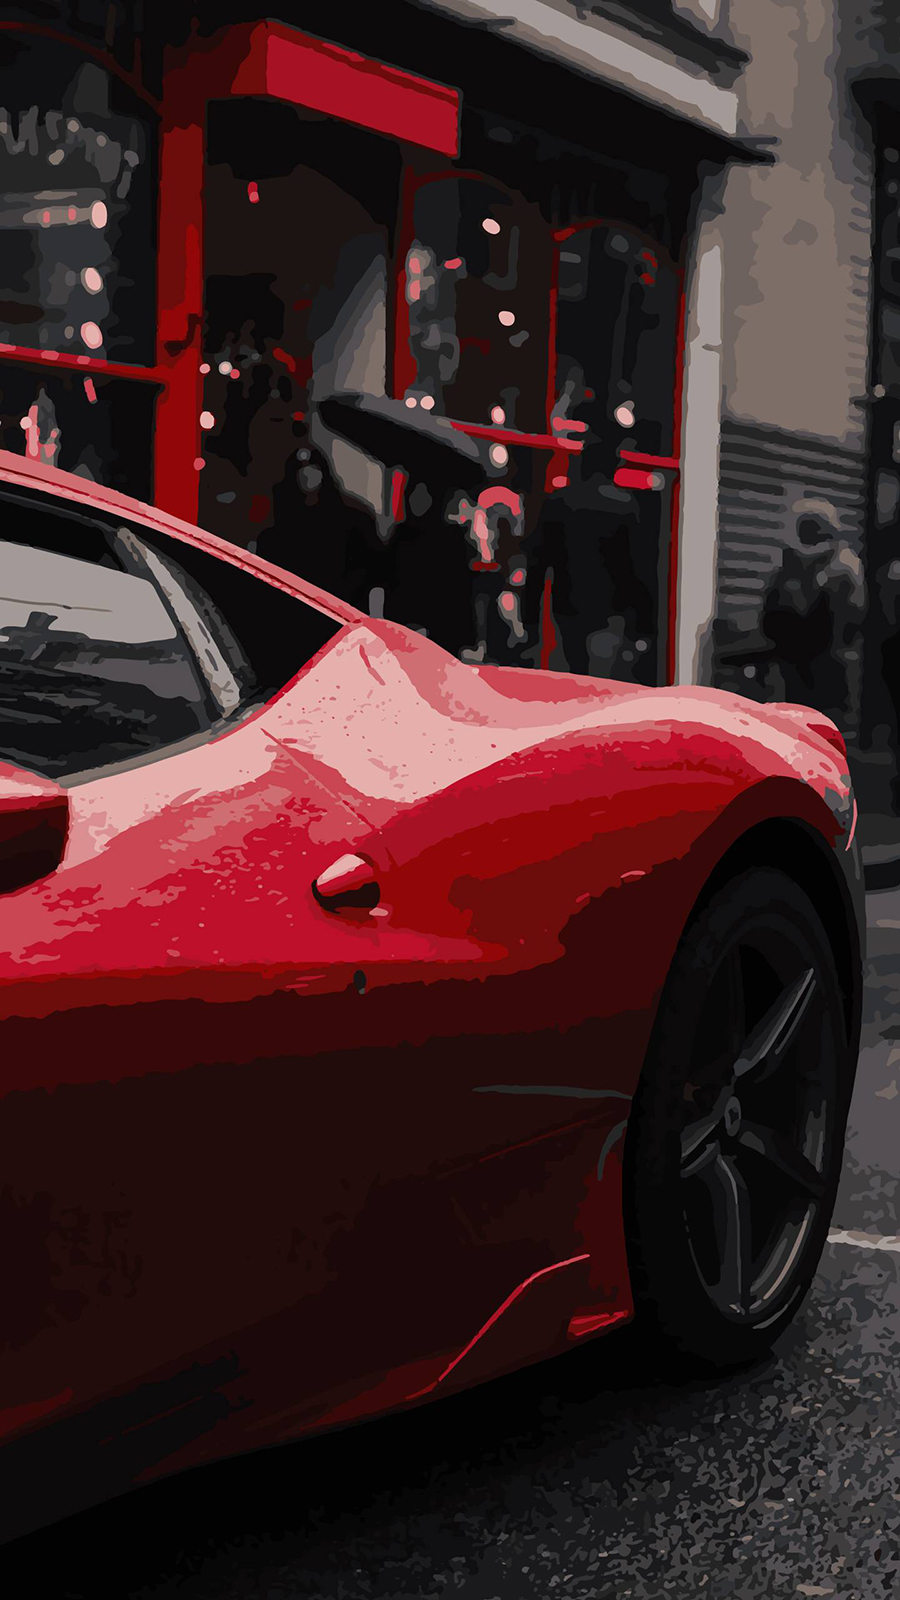 Red Ferrari Full HD Wallpapers Now Download